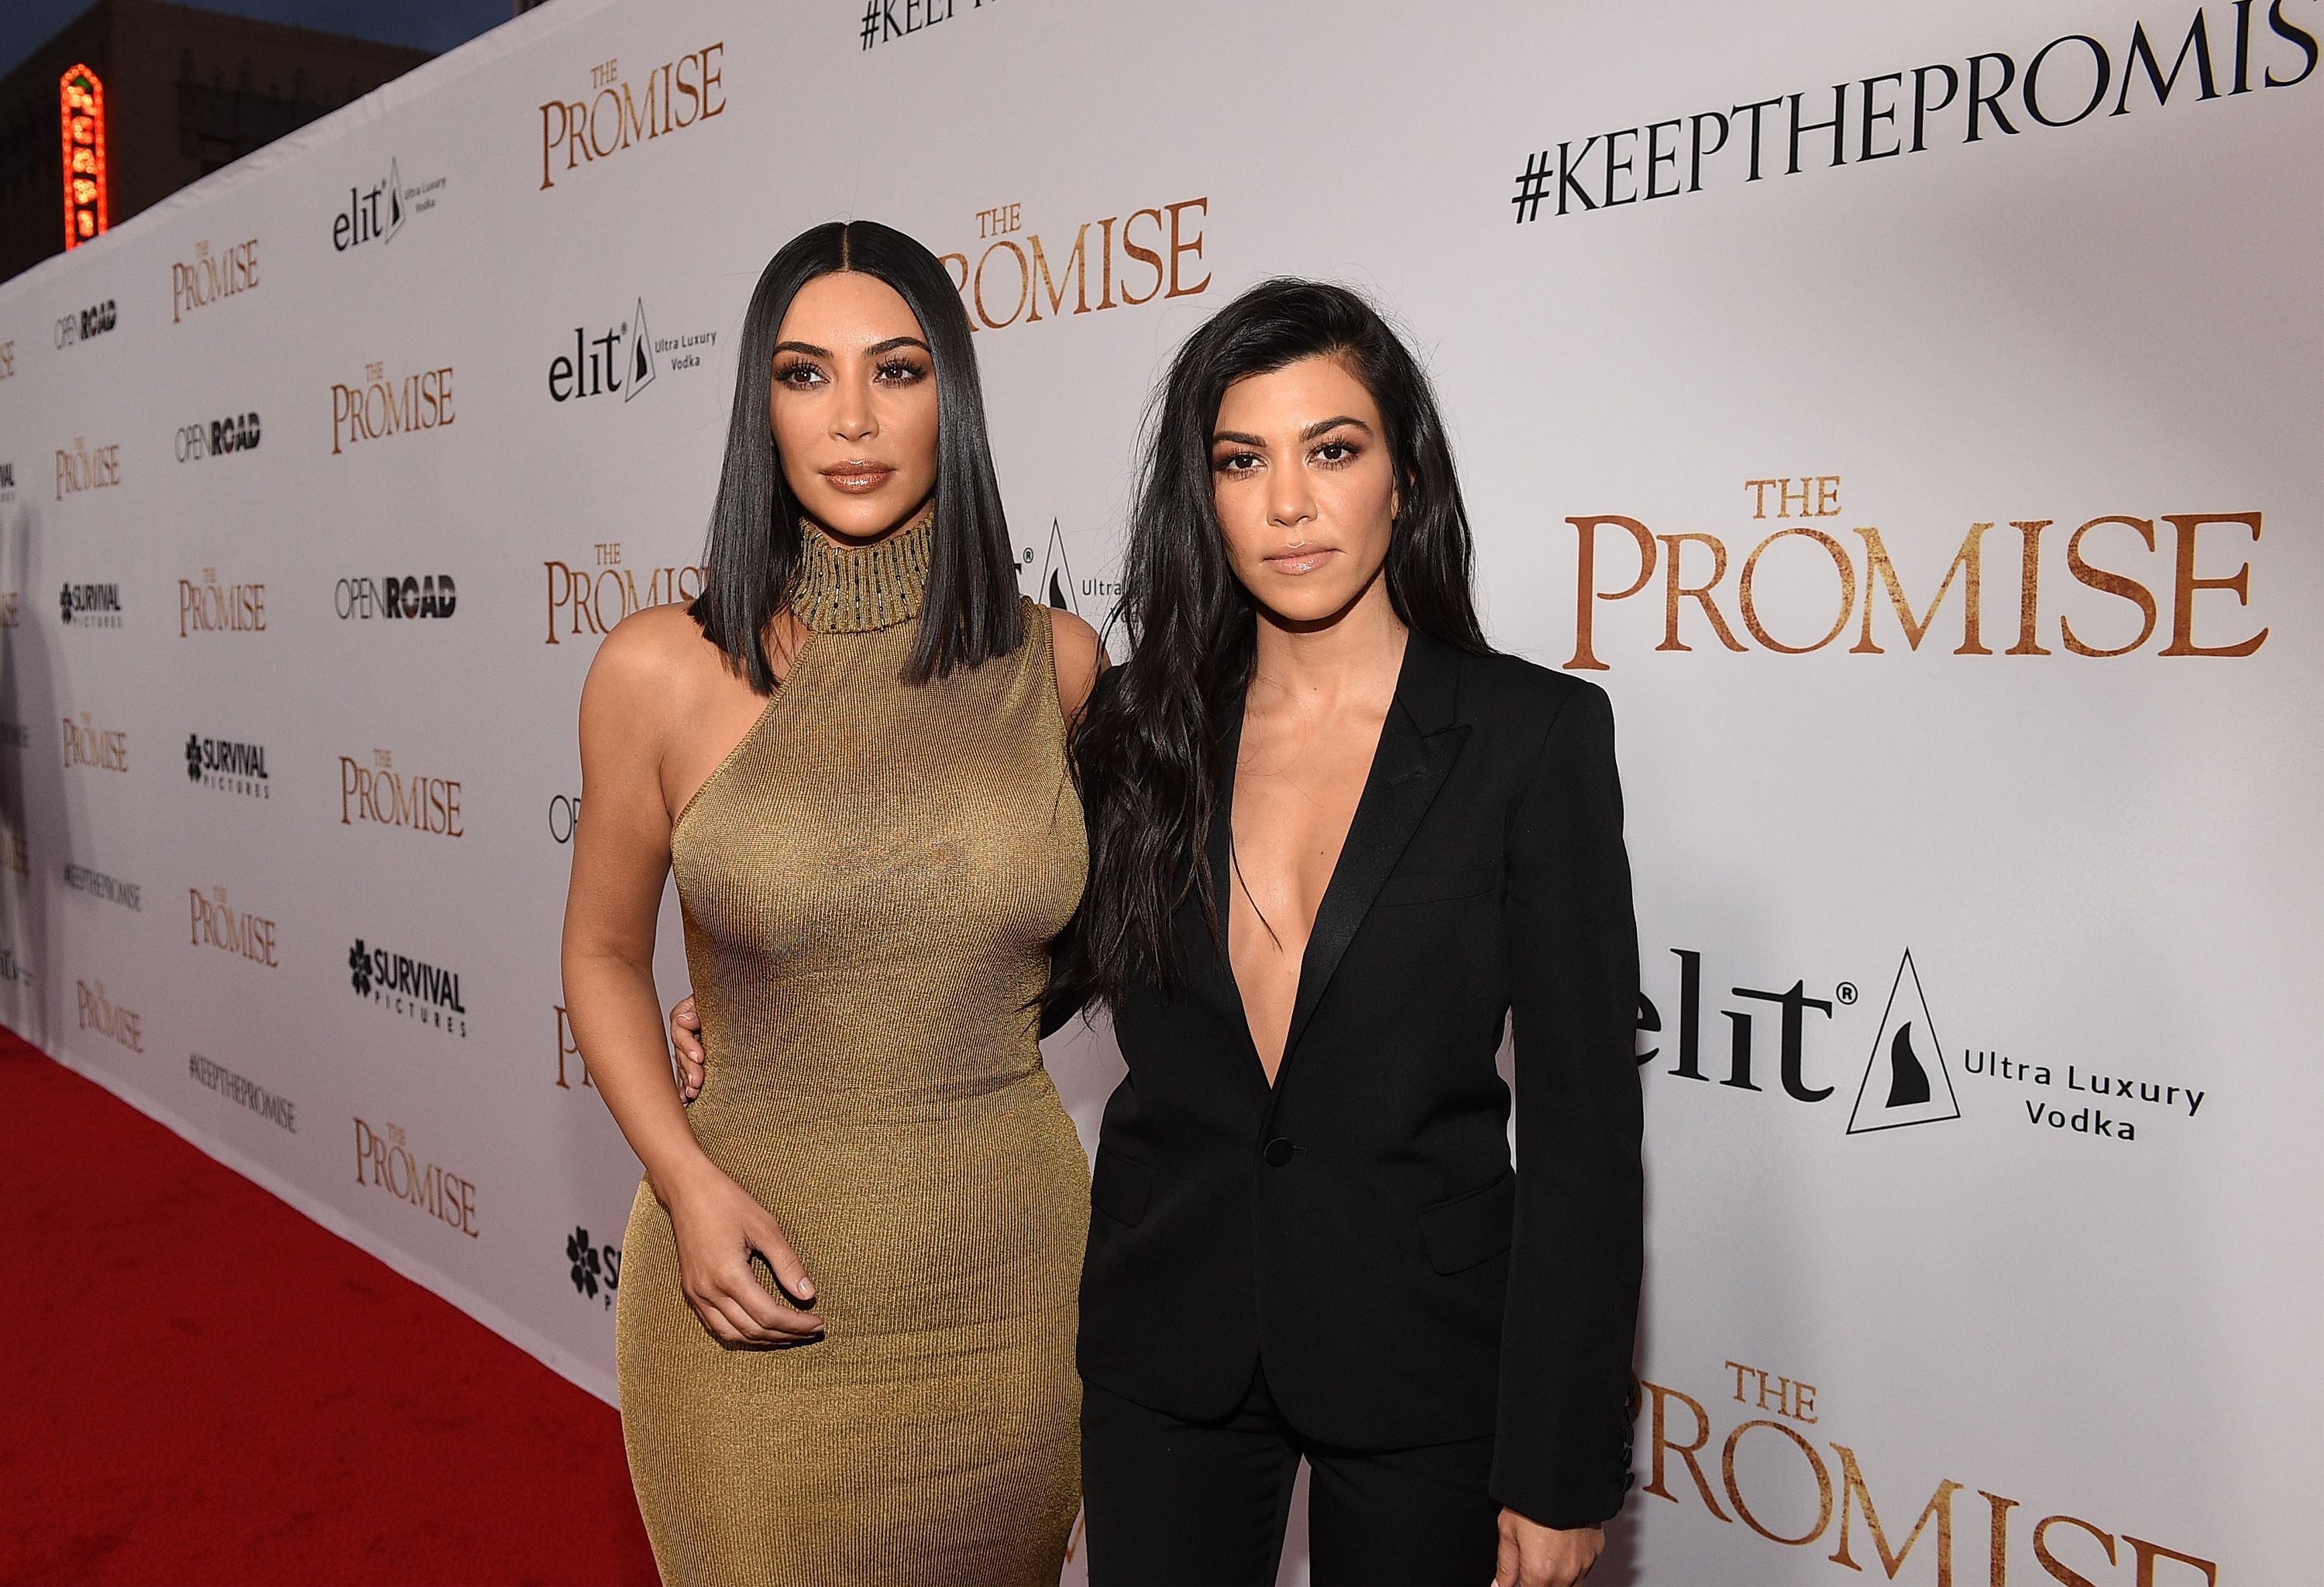 Kourtney Kardashian and Scott Disick keeping close but Kim's